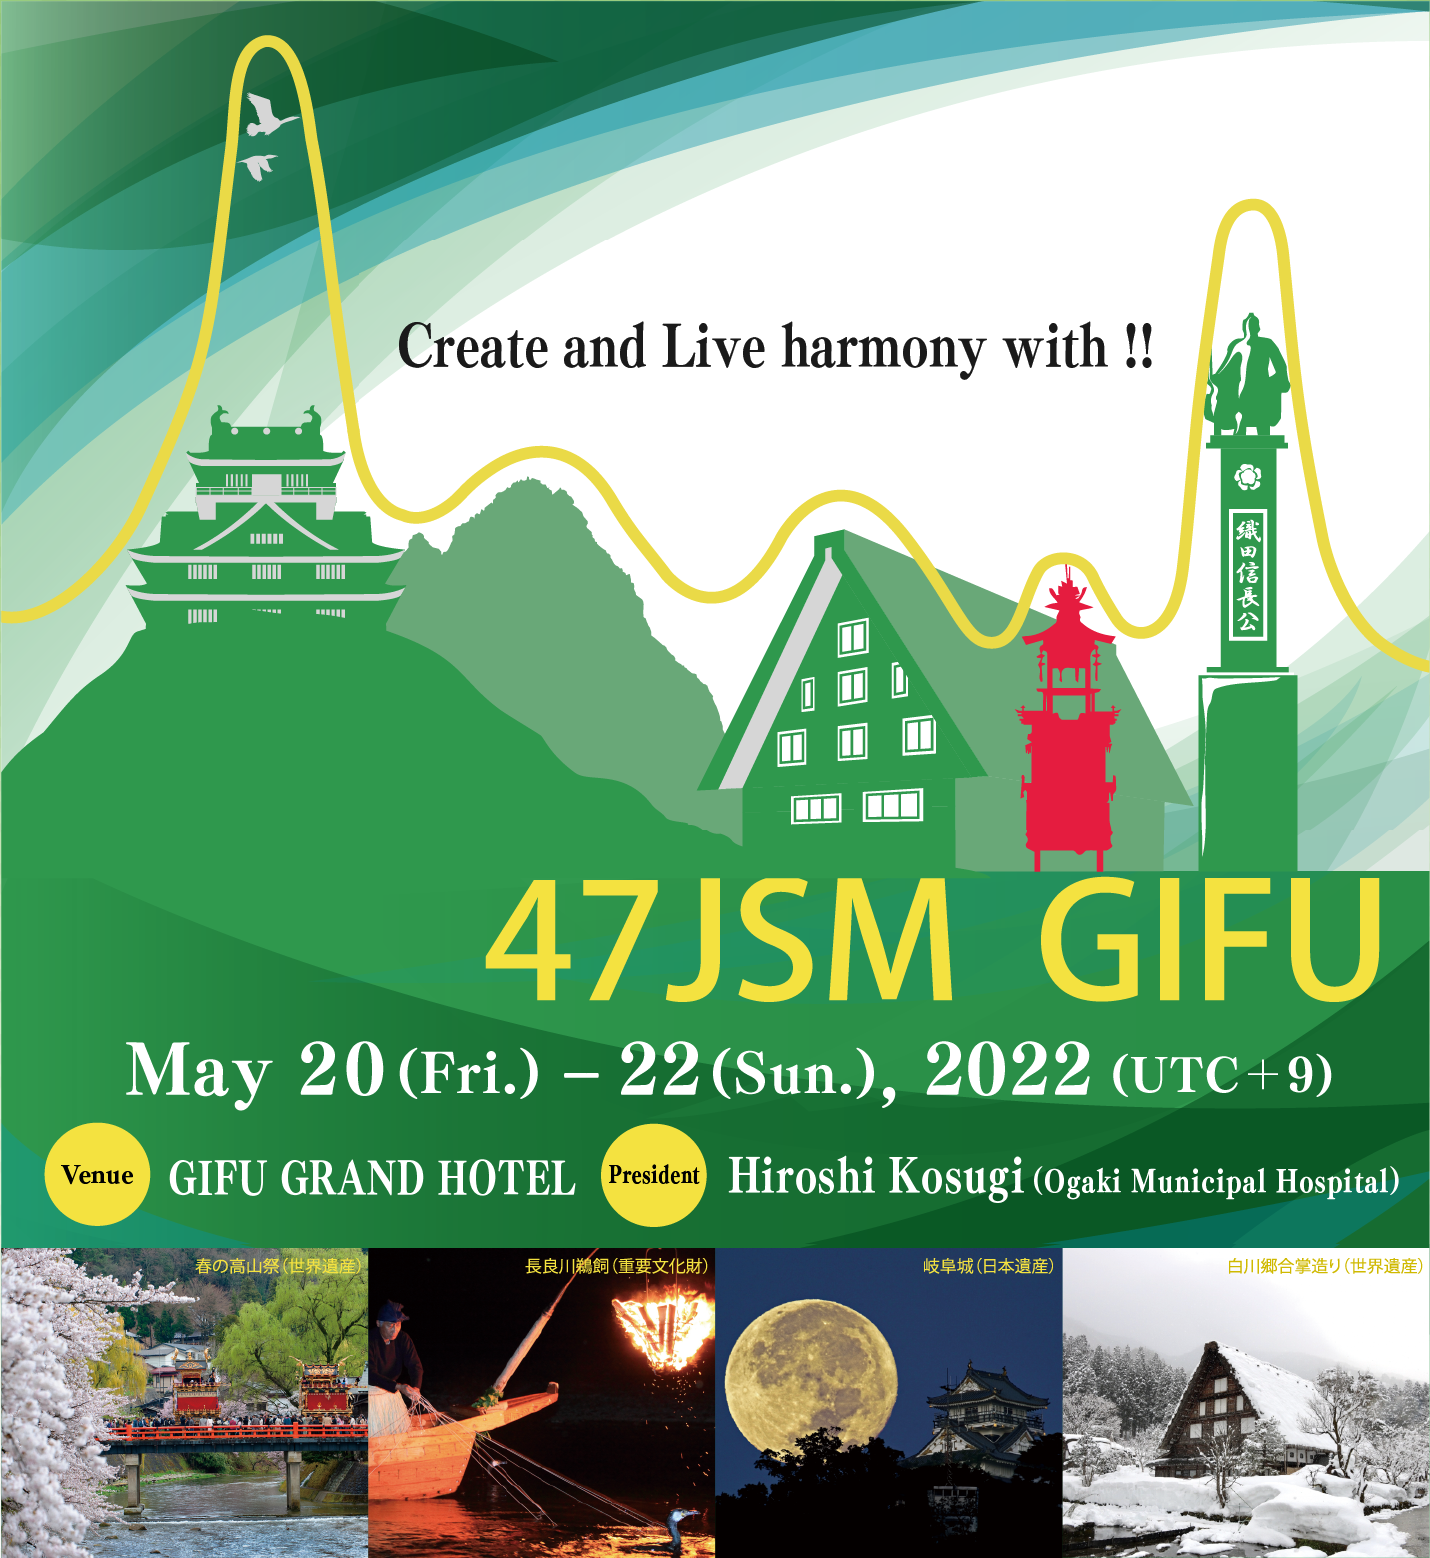 The 47th Annual Meeting of the Japanese Society of Myeloma Theme:Create and Live harmony with !! Dates:May 20(Fri.)-22(Sun.), 2022(UTC＋9) Venue:GIFU GRAND HOTEL President:Hroshi Kosugi(Ogaki Municipal Hospital)